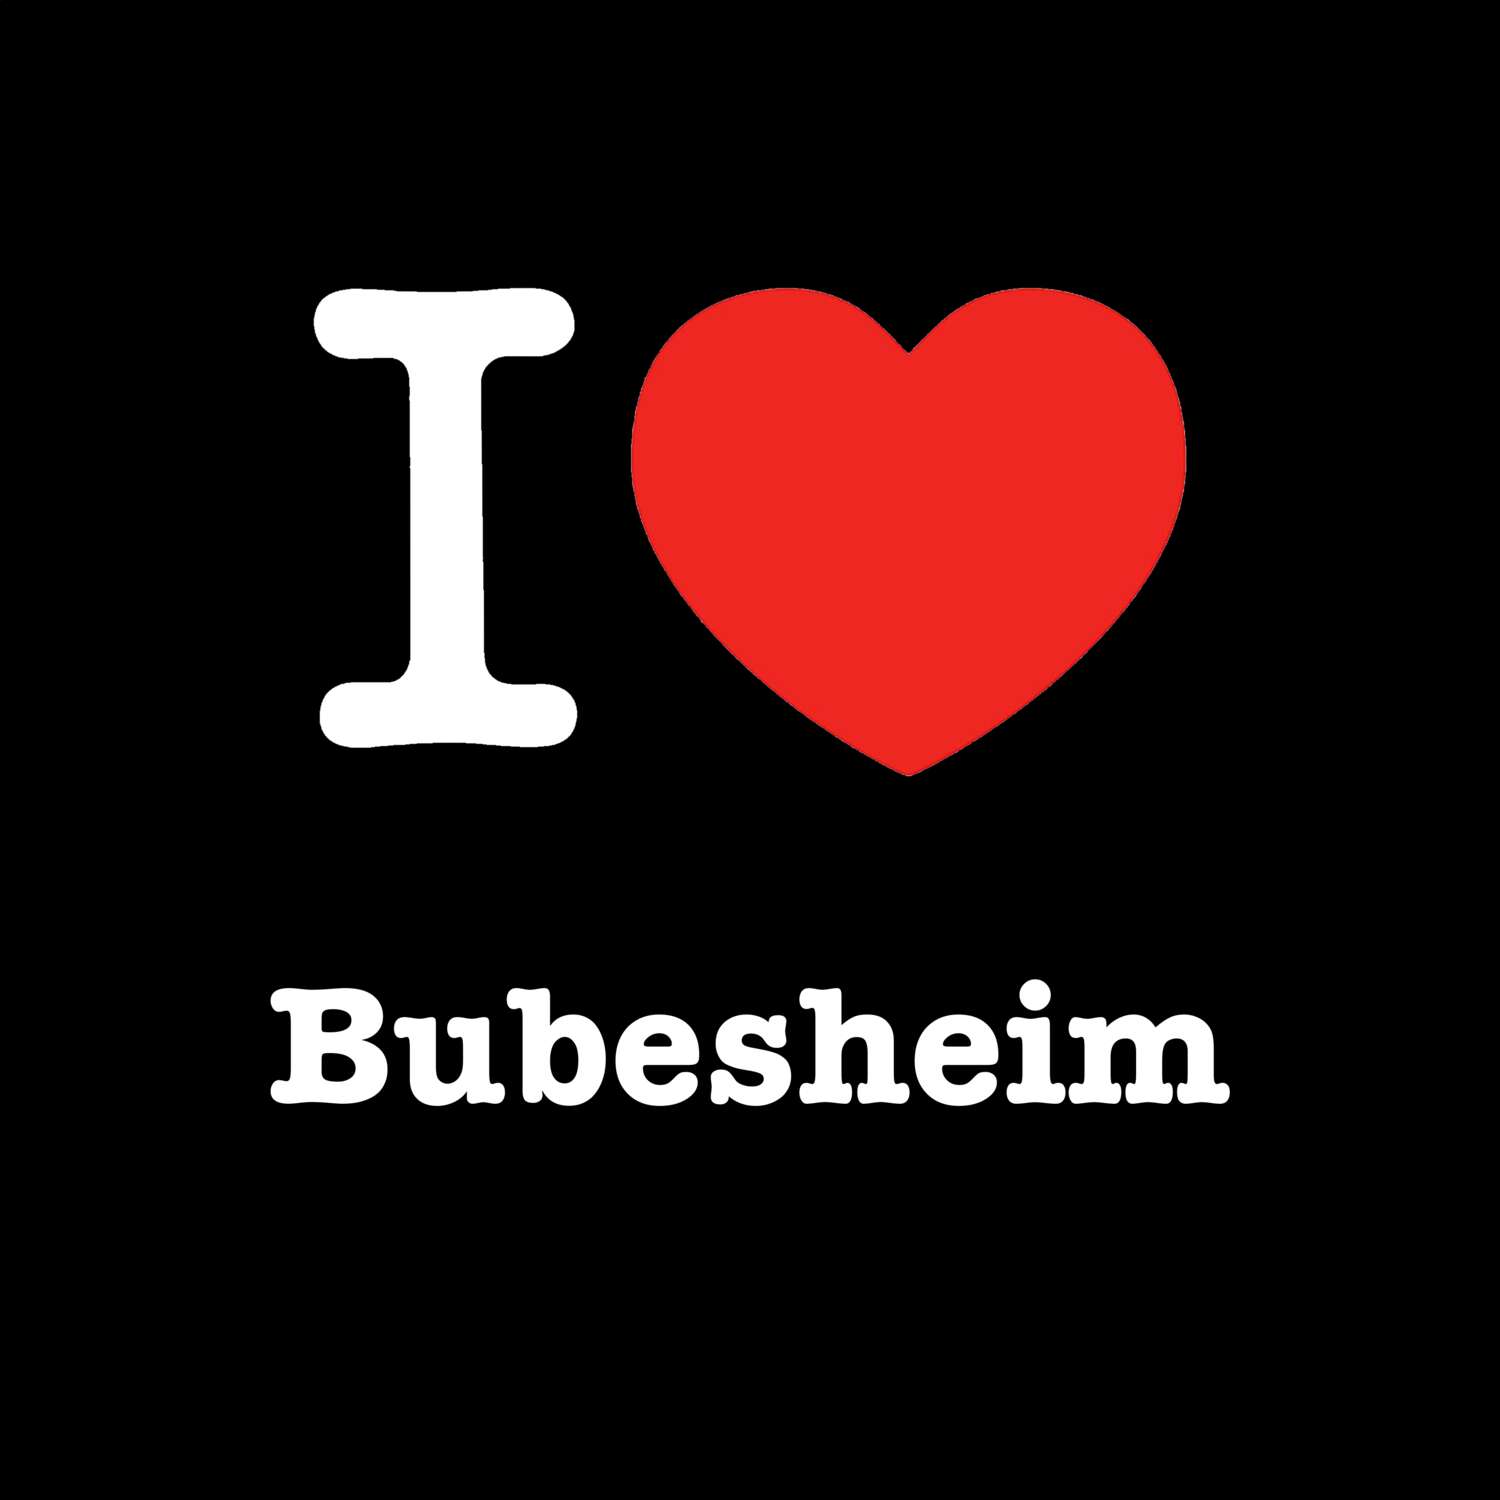 Bubesheim T-Shirt »I love«